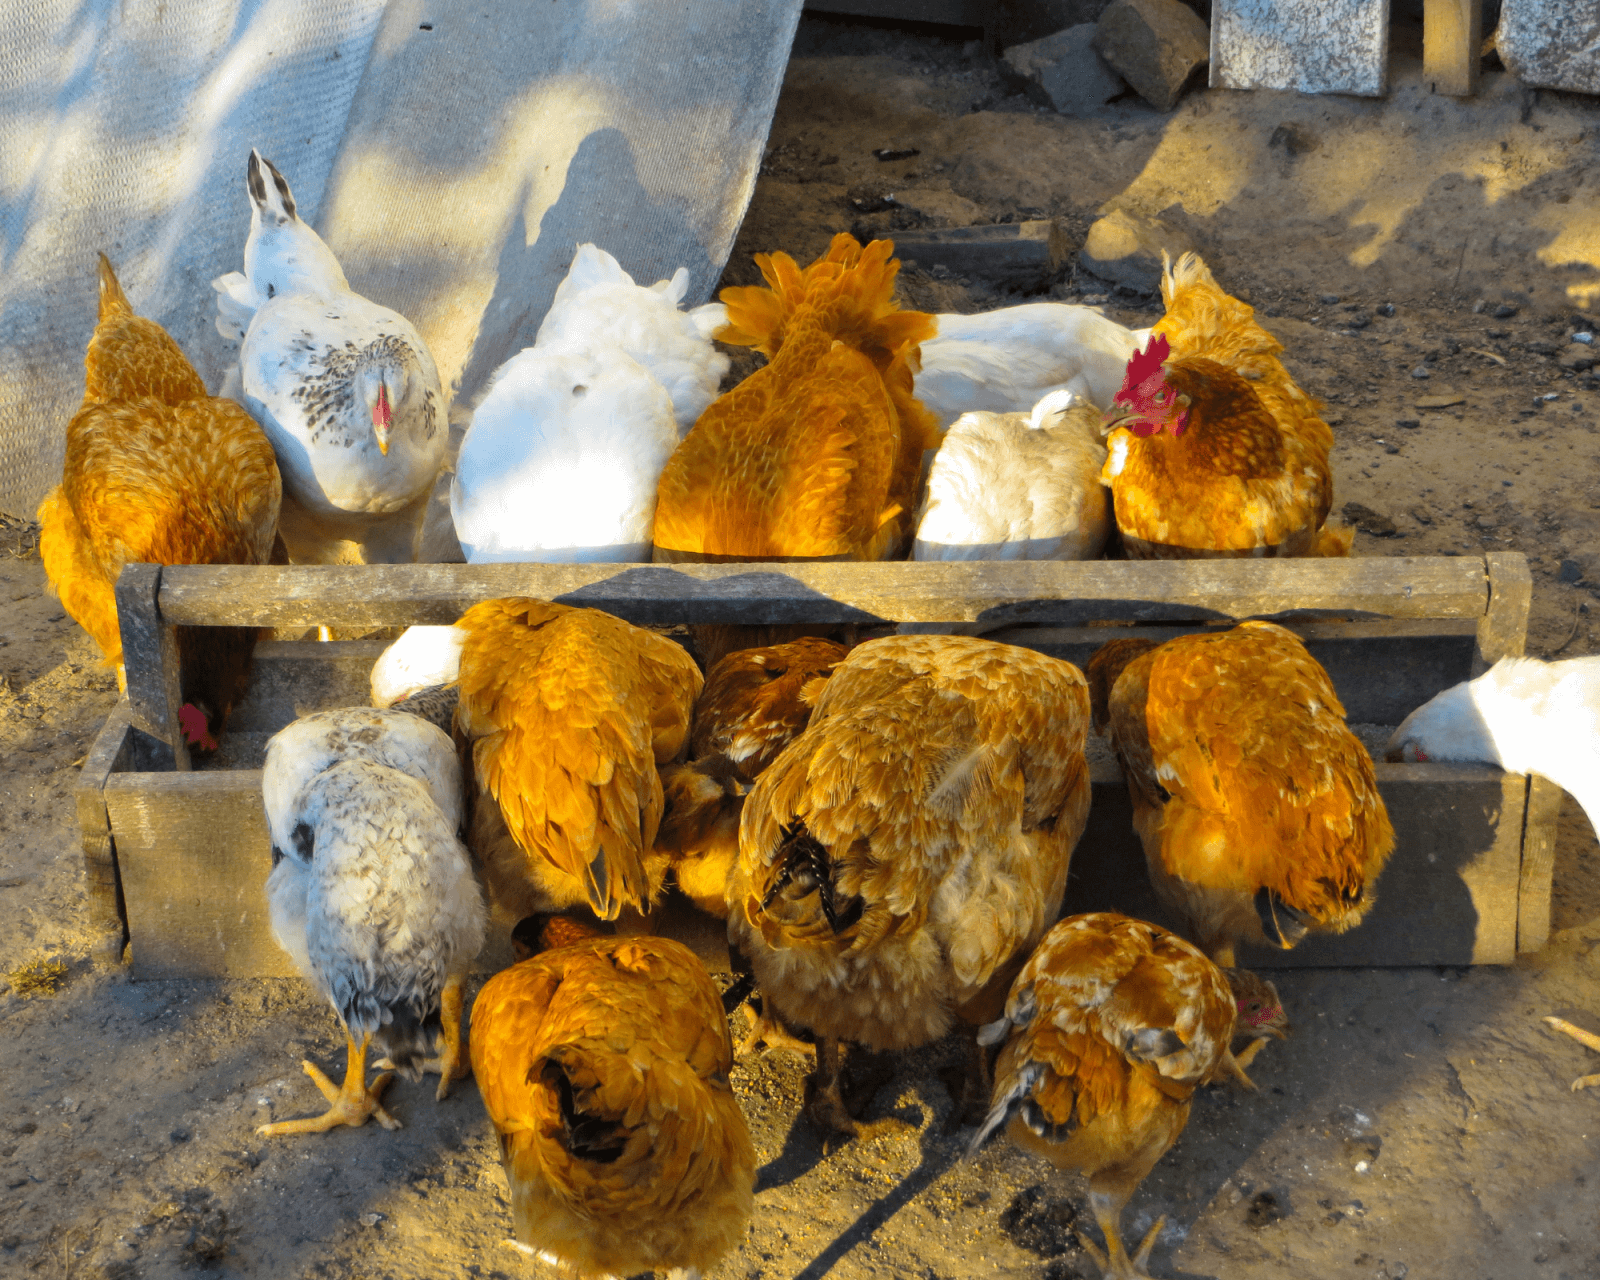 chickens feeding demonstrating pecking order